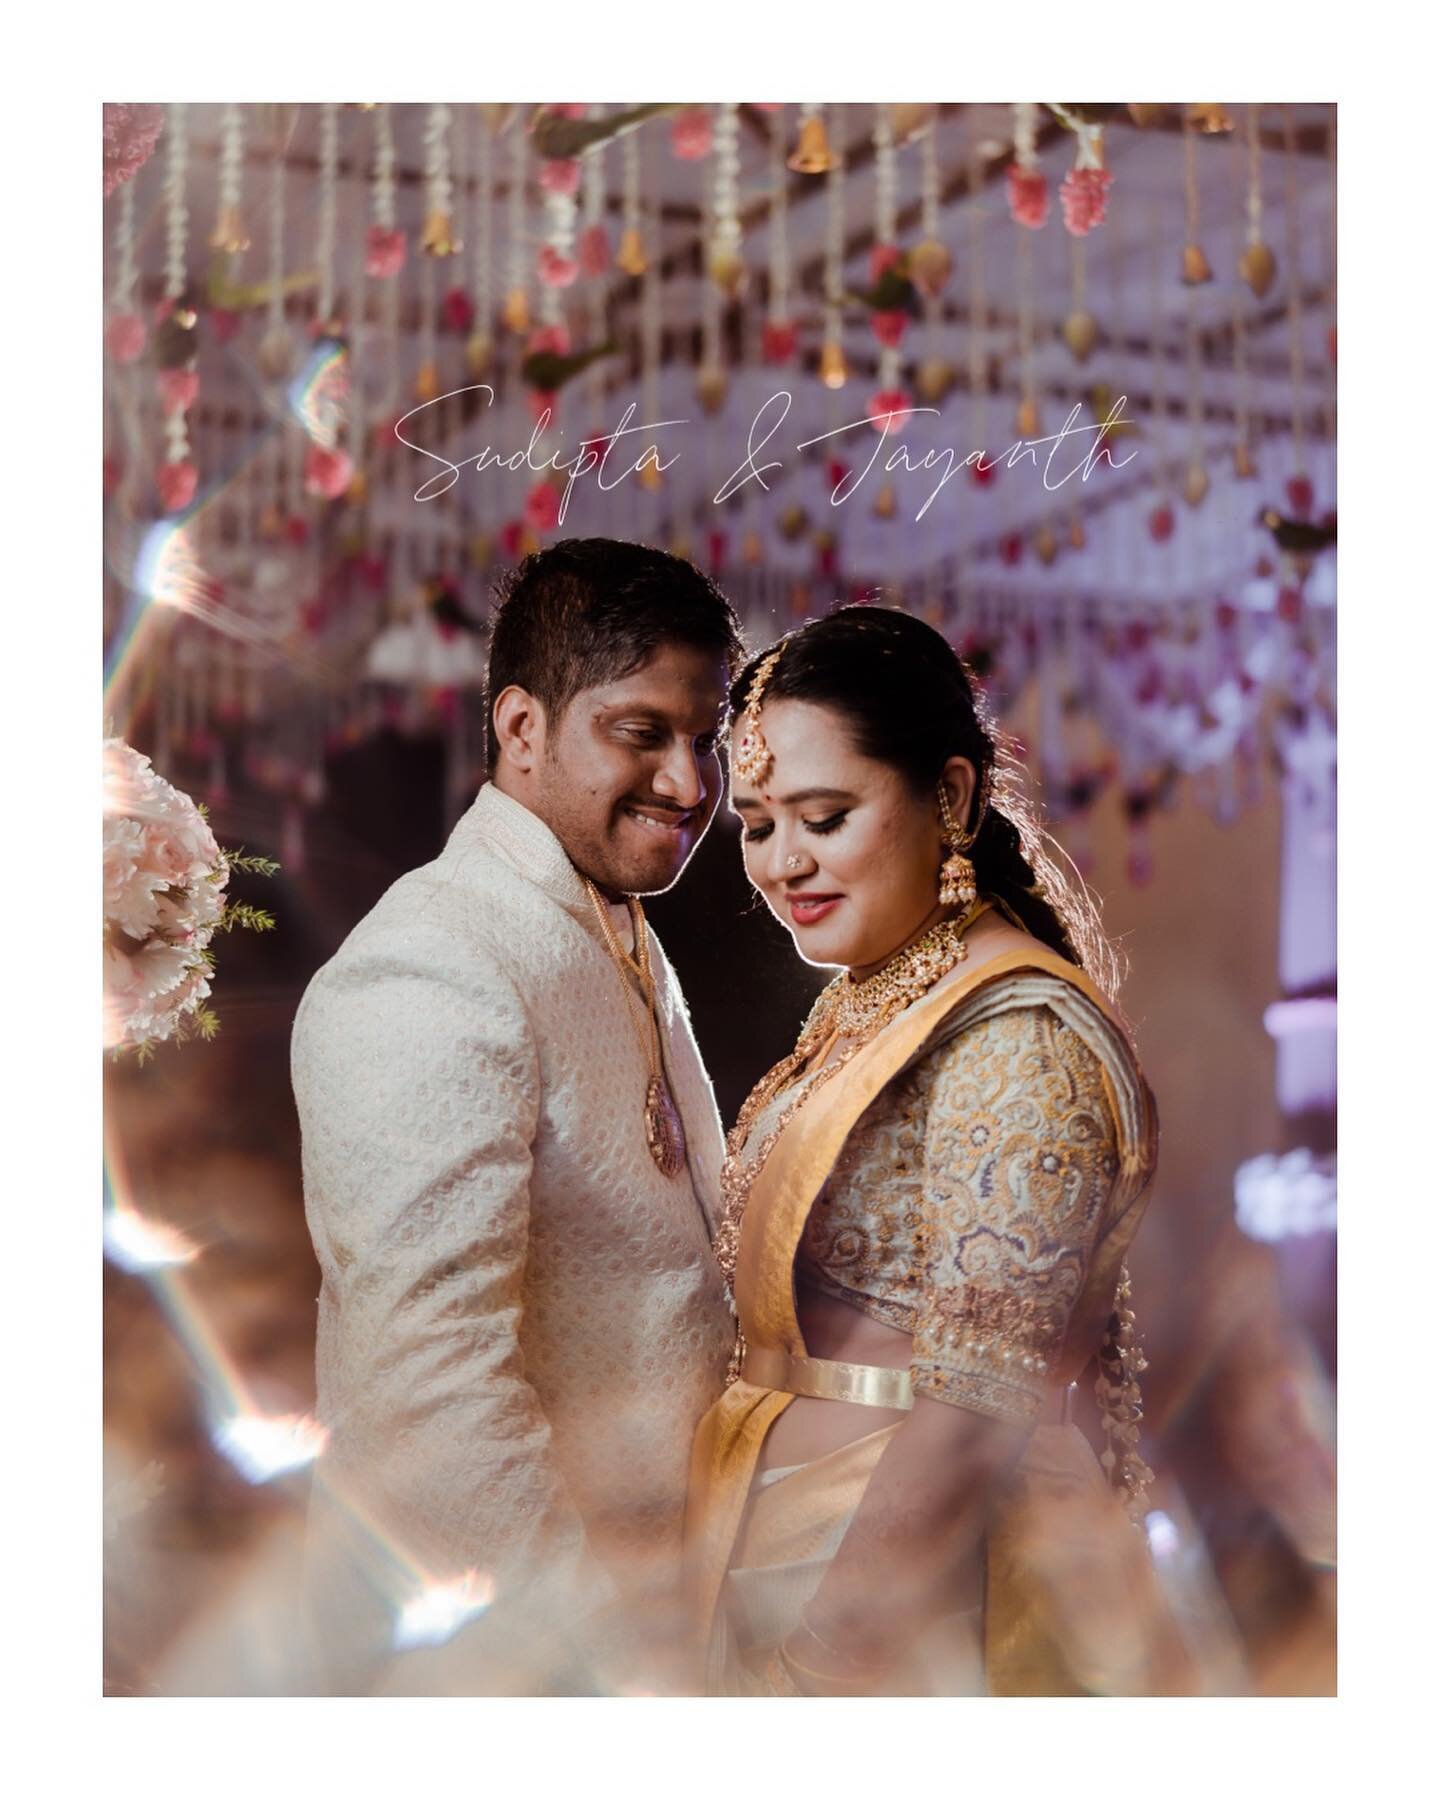 ✨✨Sudipta + Jayanth✨✨
.
.
.
.
.
. 
.
#twosday
#BridesofMangaluru #BridesofIndia #indianbride
#GroomsofMangaluru #GroomsofIndia #Indiangrooms
#Bride #groom #indiagroom #Indianbride
#Weddingphotography #IndianWedding #Weddingshoot #Candidshoot #candidp